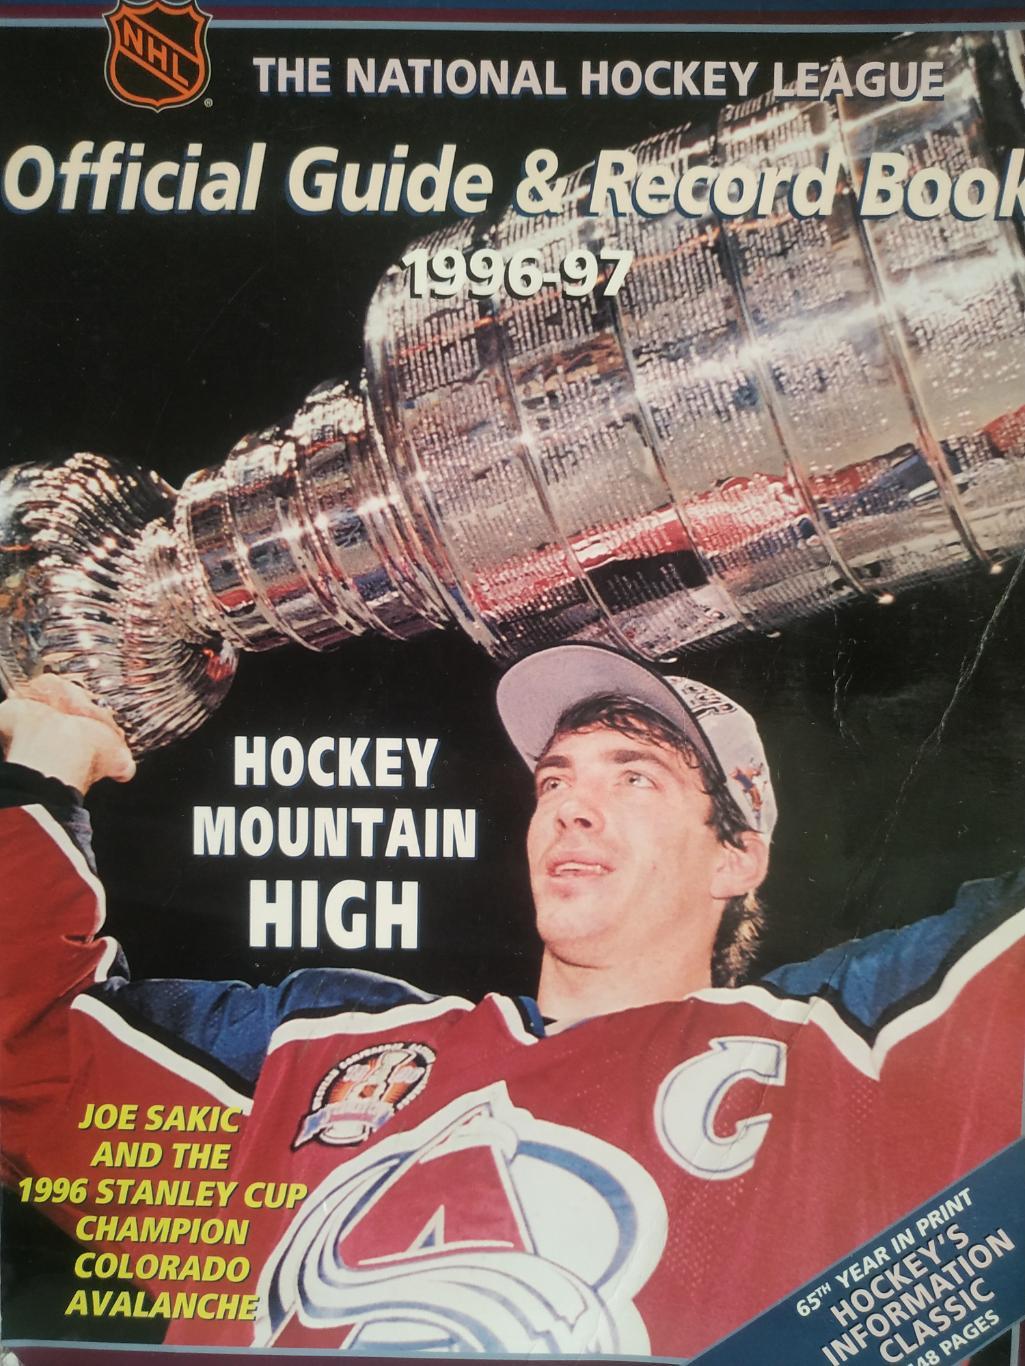 ХОККЕЙ ОФИЦИАЛЬНЫЙ СПРАВОЧНИК НХЛ 1996-97 NHL OFFICIAL GUIDE AND RECORD BOOK